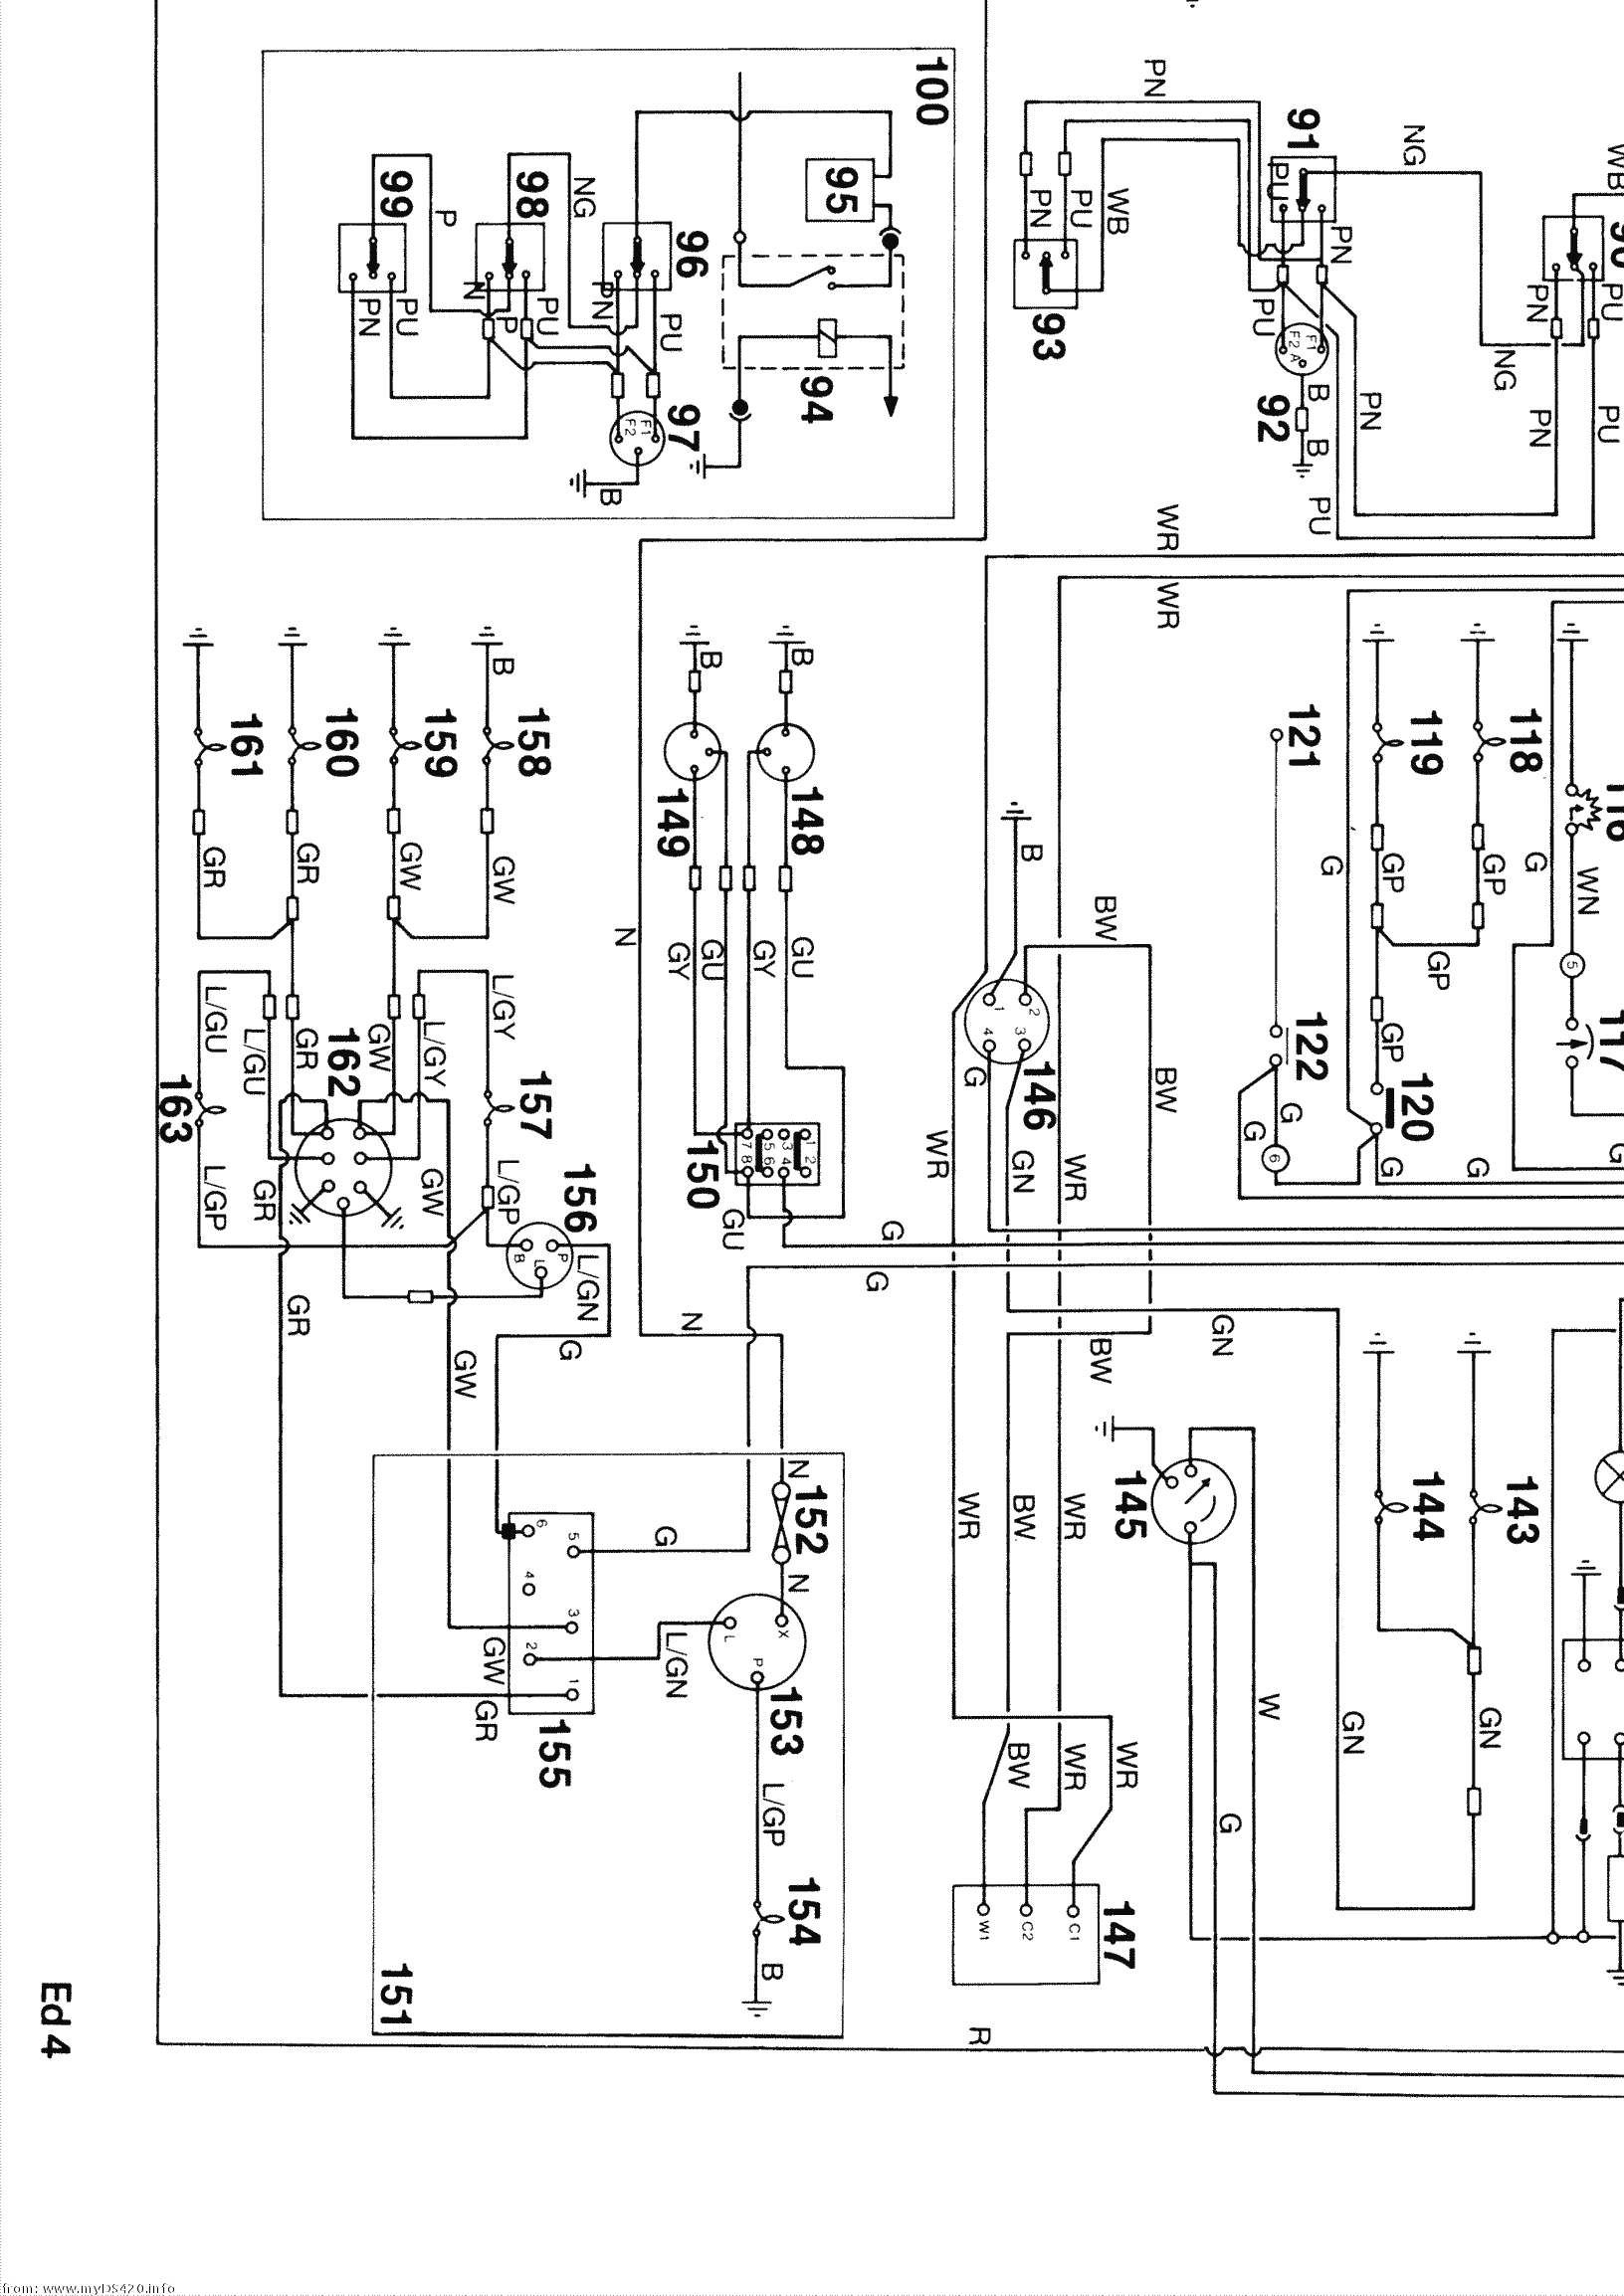 wiring diagram medium res. A4 SE (1986)